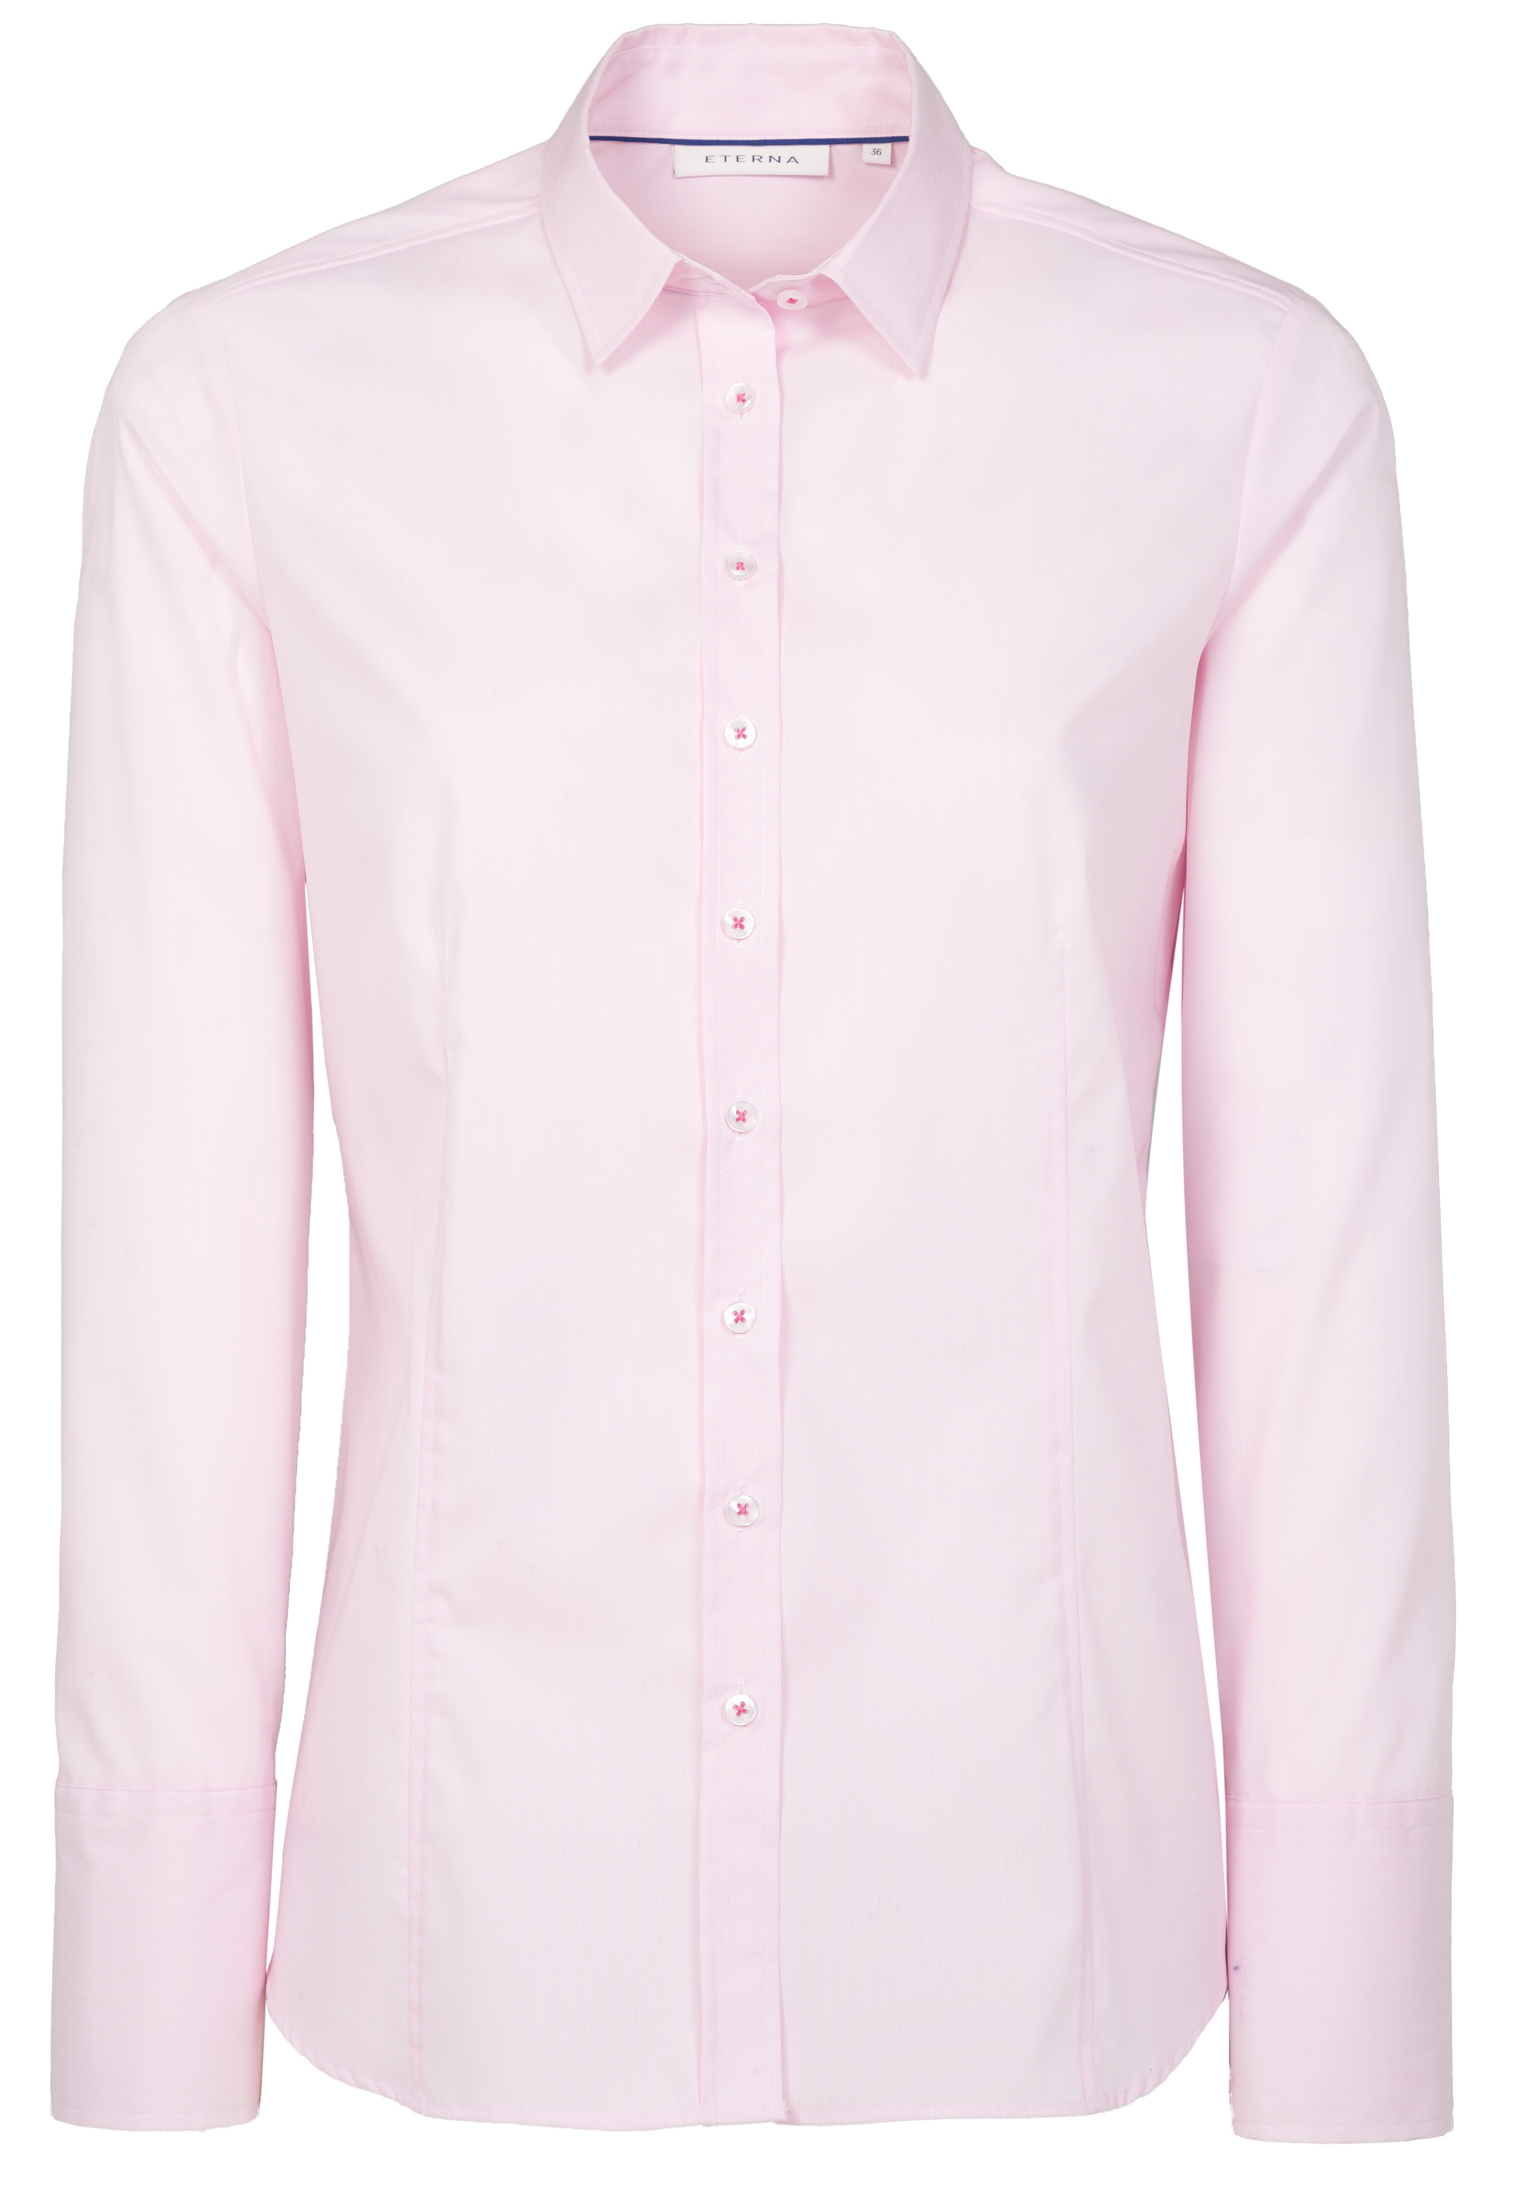 ETERNA MODERN CLASSIC Langarm Bluse Modern | Damen | Blusen Jeans-Manufaktur | gestreift rosa-weiß Bekleidung | 6151 | Eterna D624.51 Fit